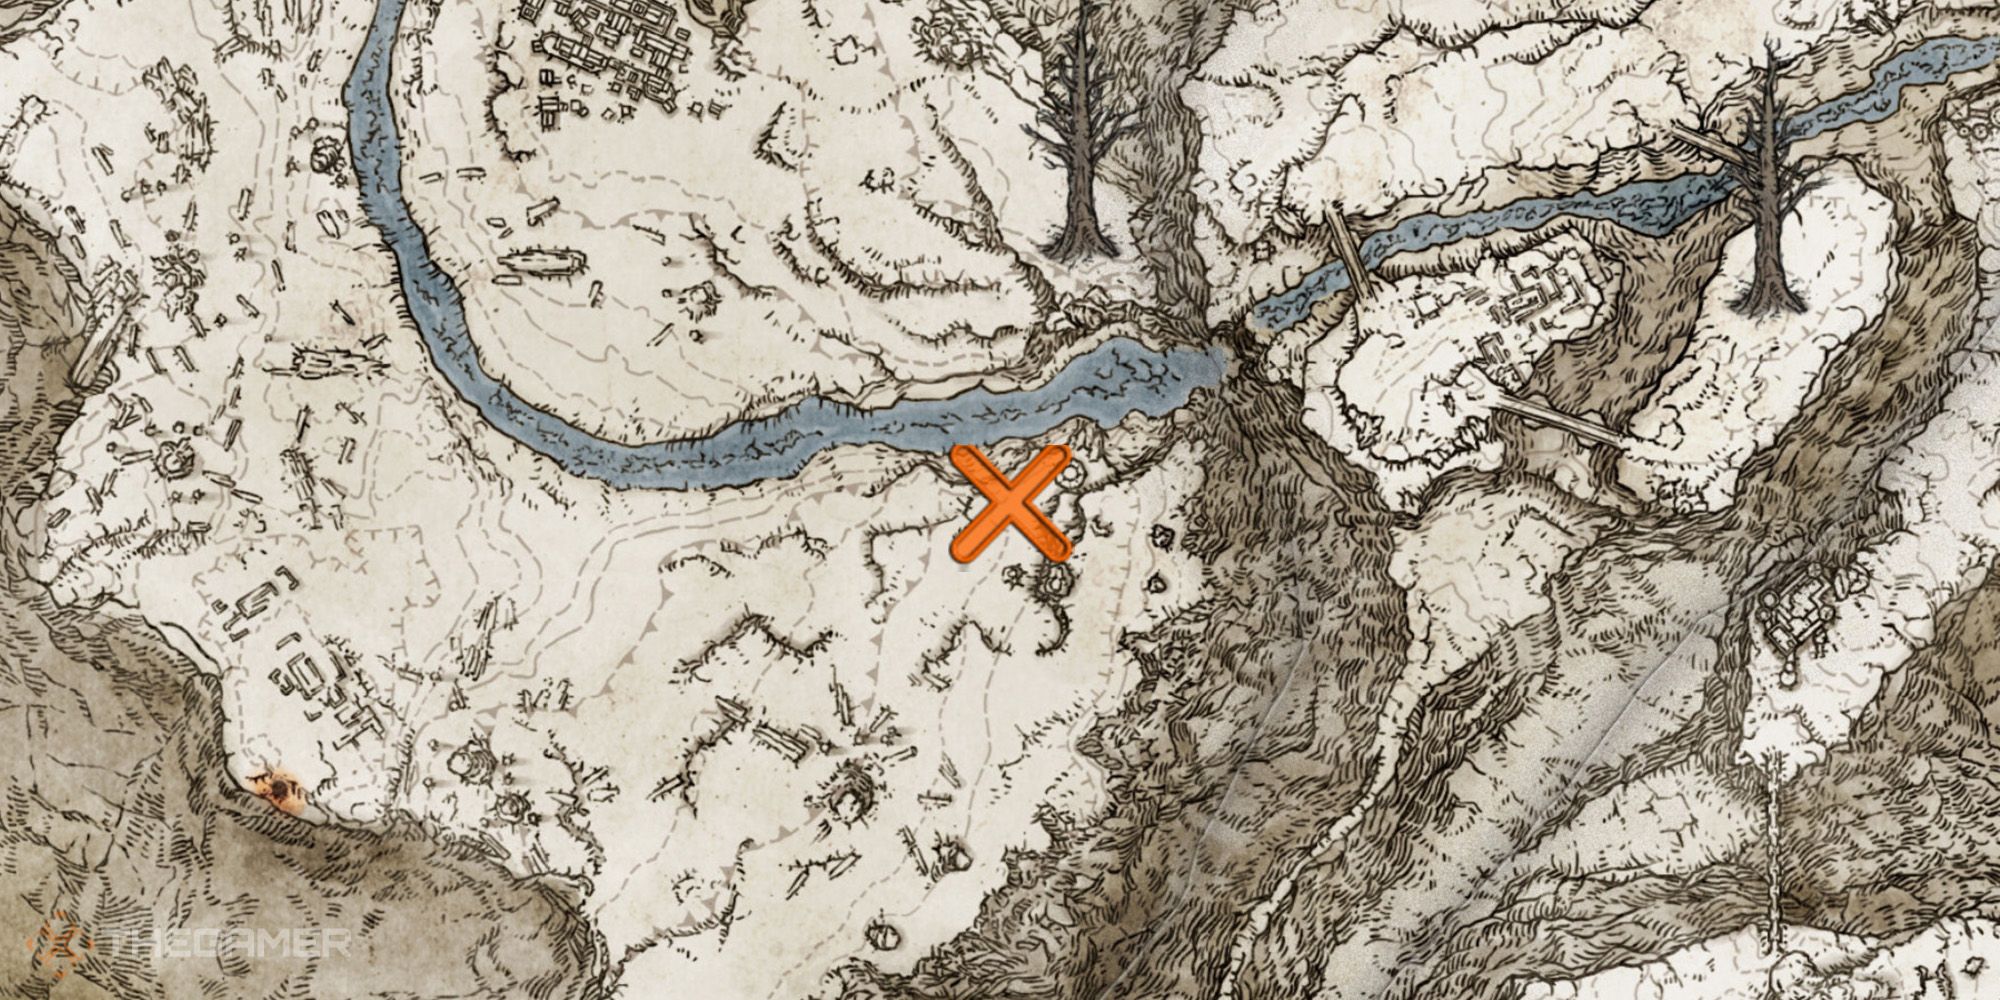 Elden Ring Map showing the location of Glintstone Craftsman's Cookbook [8]